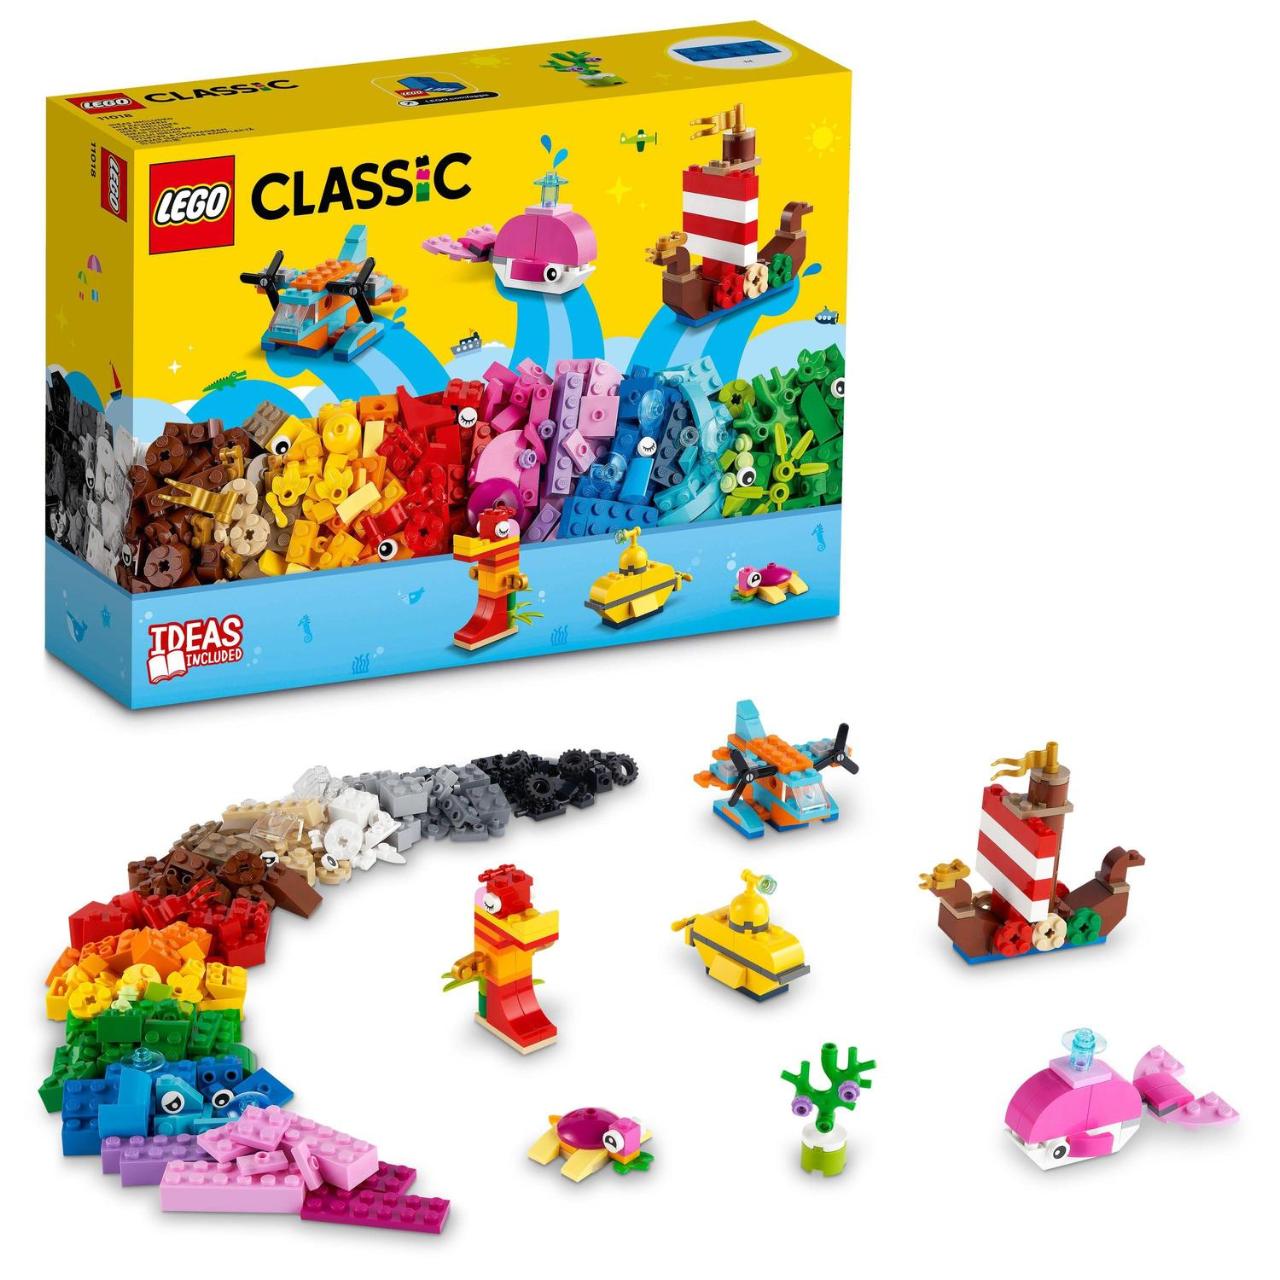 LEGO Classic, Distractie creativa in ocean, numar piese 333, varsta 4+